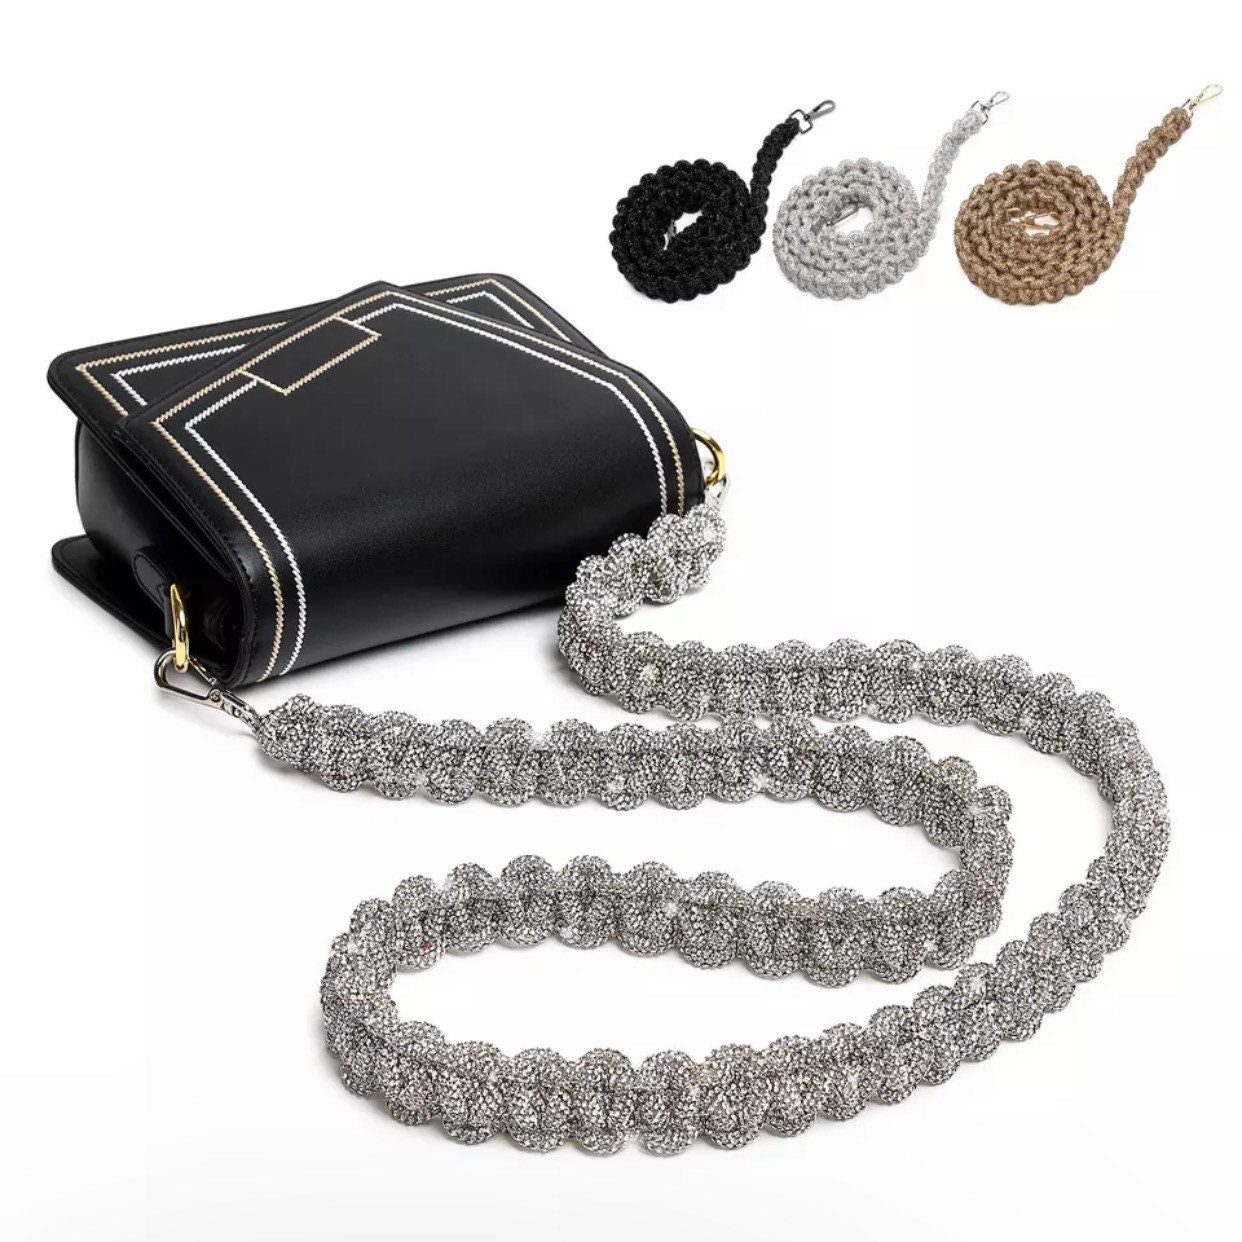 6mm New Bling Crystals Gold Purse Chain Strap, Gems Bag Handle Chain,  Luxury Crossbody Handbag Strap, Lady Shoulder Strap Chain High Quality 